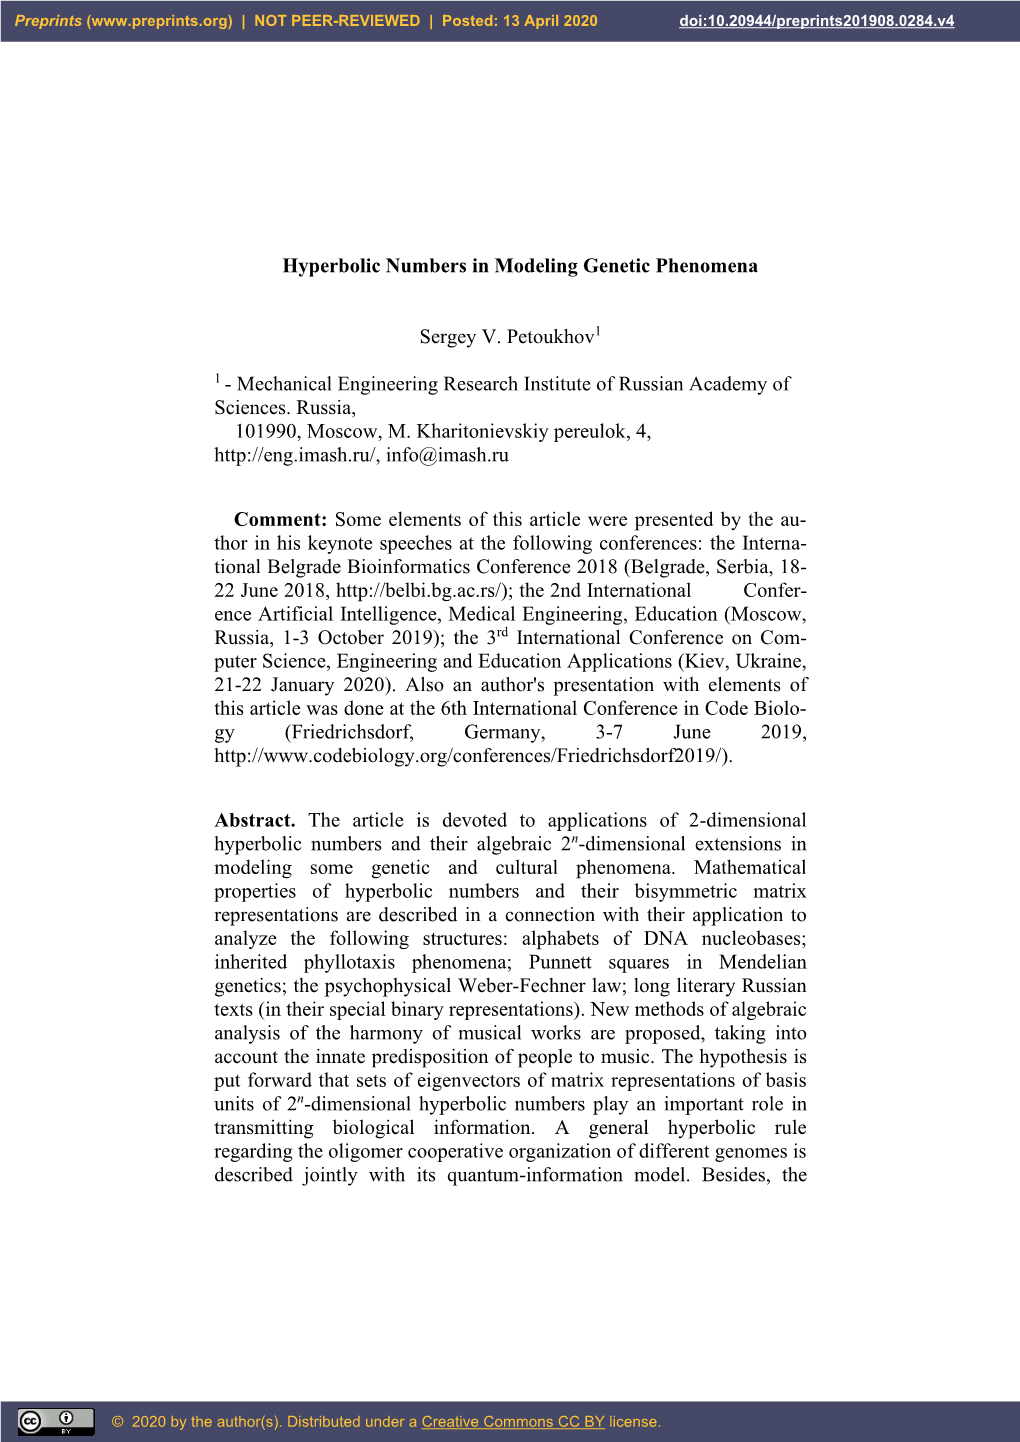 Hyperbolic Numbers in Modeling Genetic Phenomena